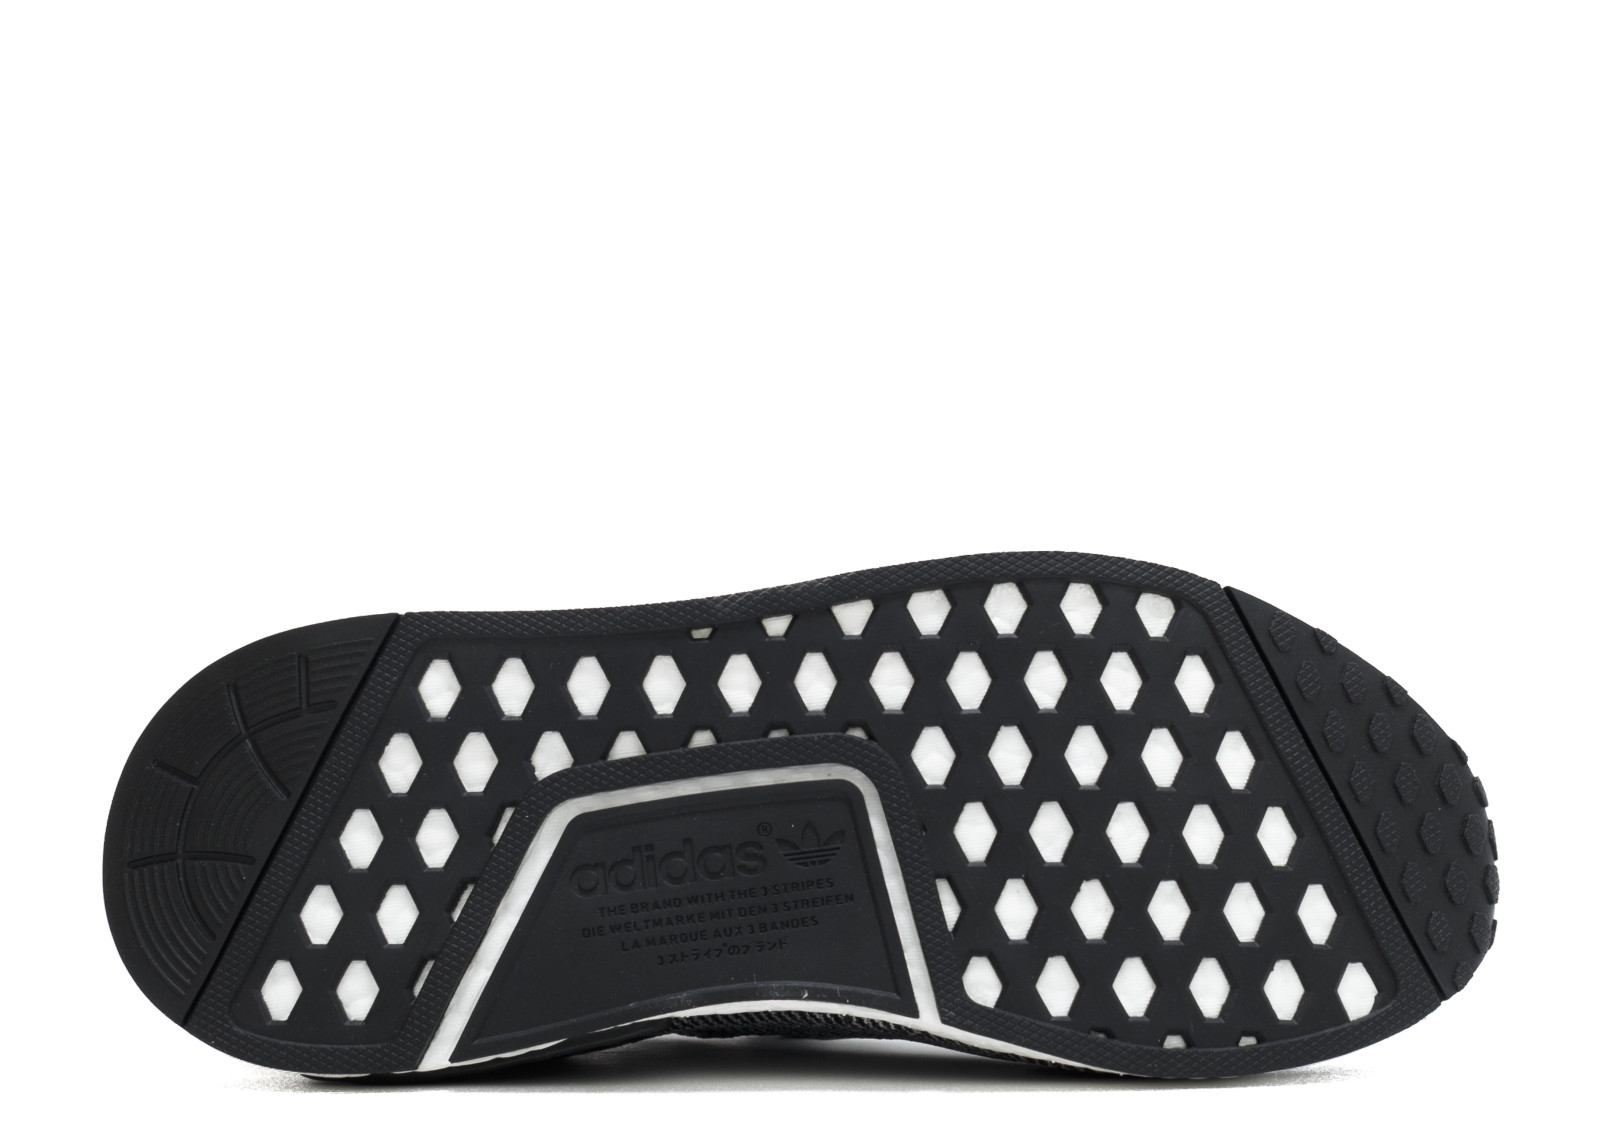 adidas Originals NMD R1 Primeknit Core Black/White